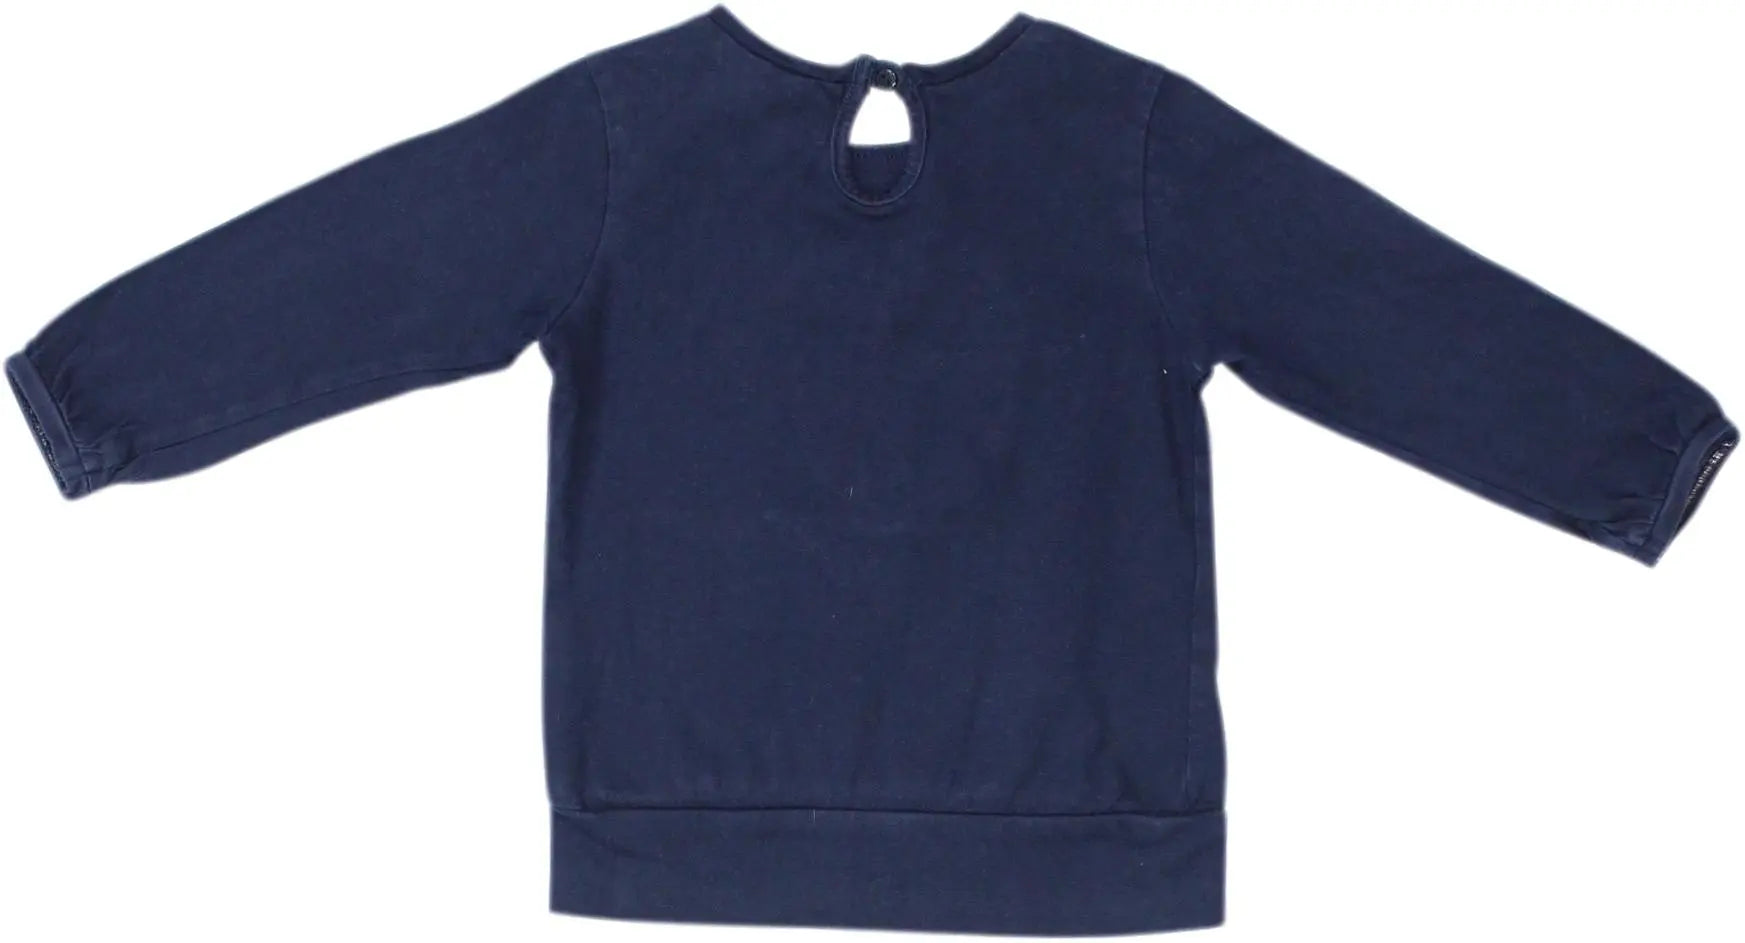 Bakkaboe - BLUE10144- ThriftTale.com - Vintage and second handclothing